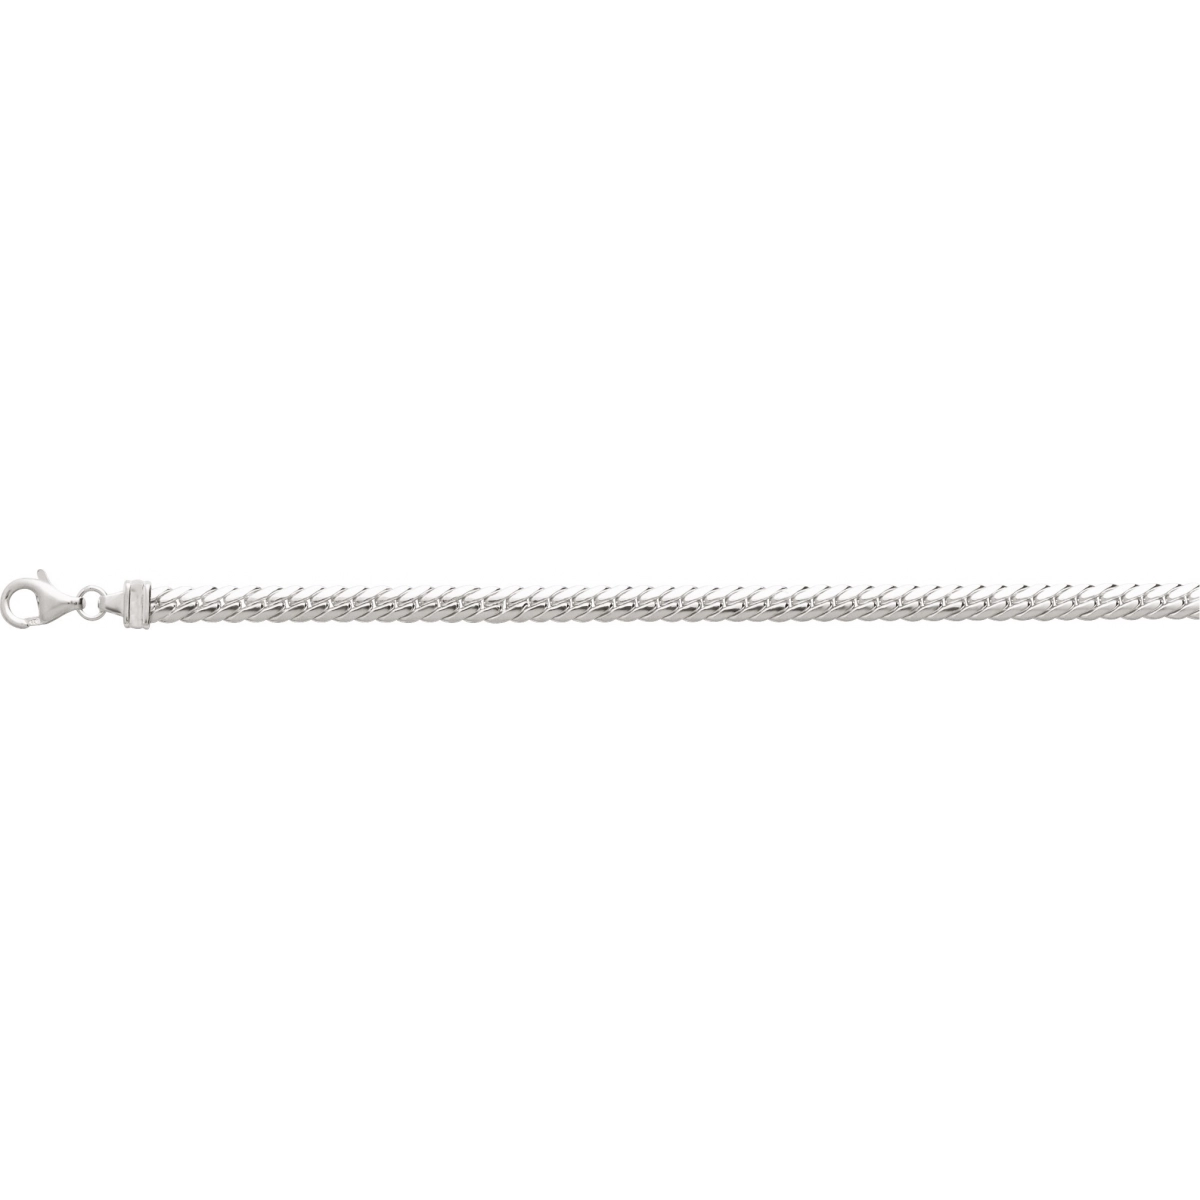 Bracelet rh925 Silver - Size: 18  Lua Blanca  301367B.18